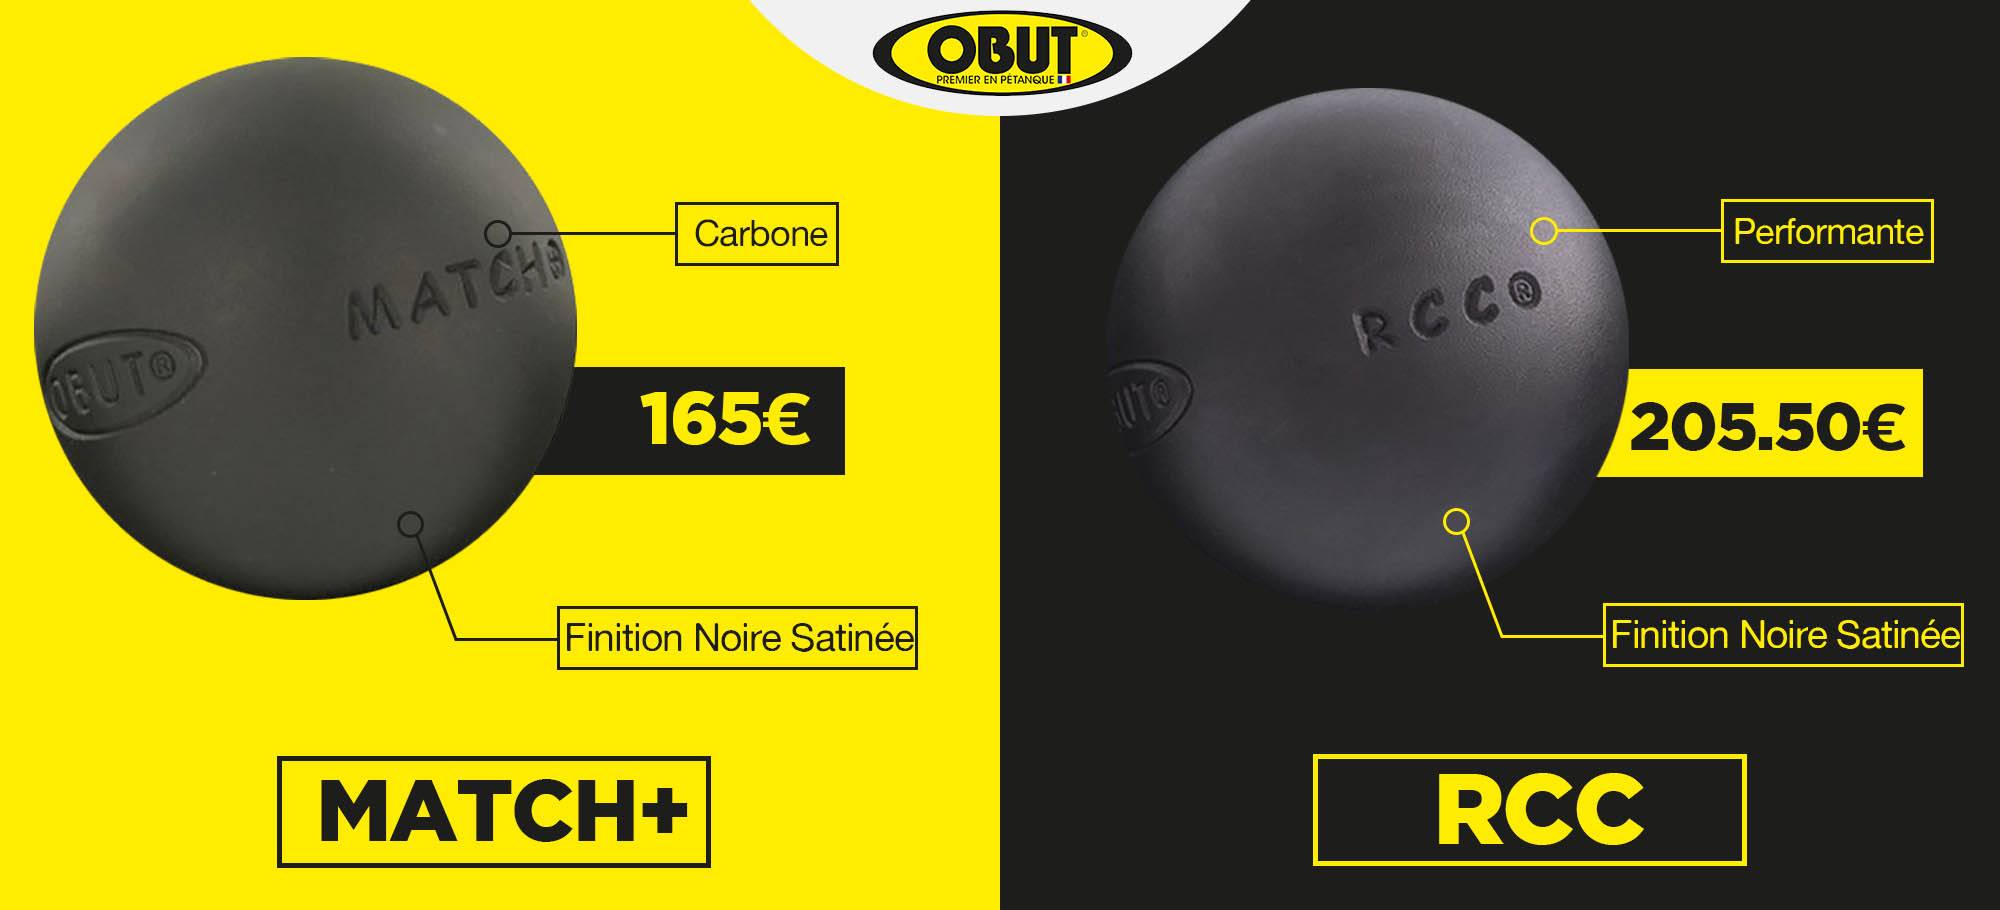 You are currently viewing Différences entre les boules Obut Match+ et RCC